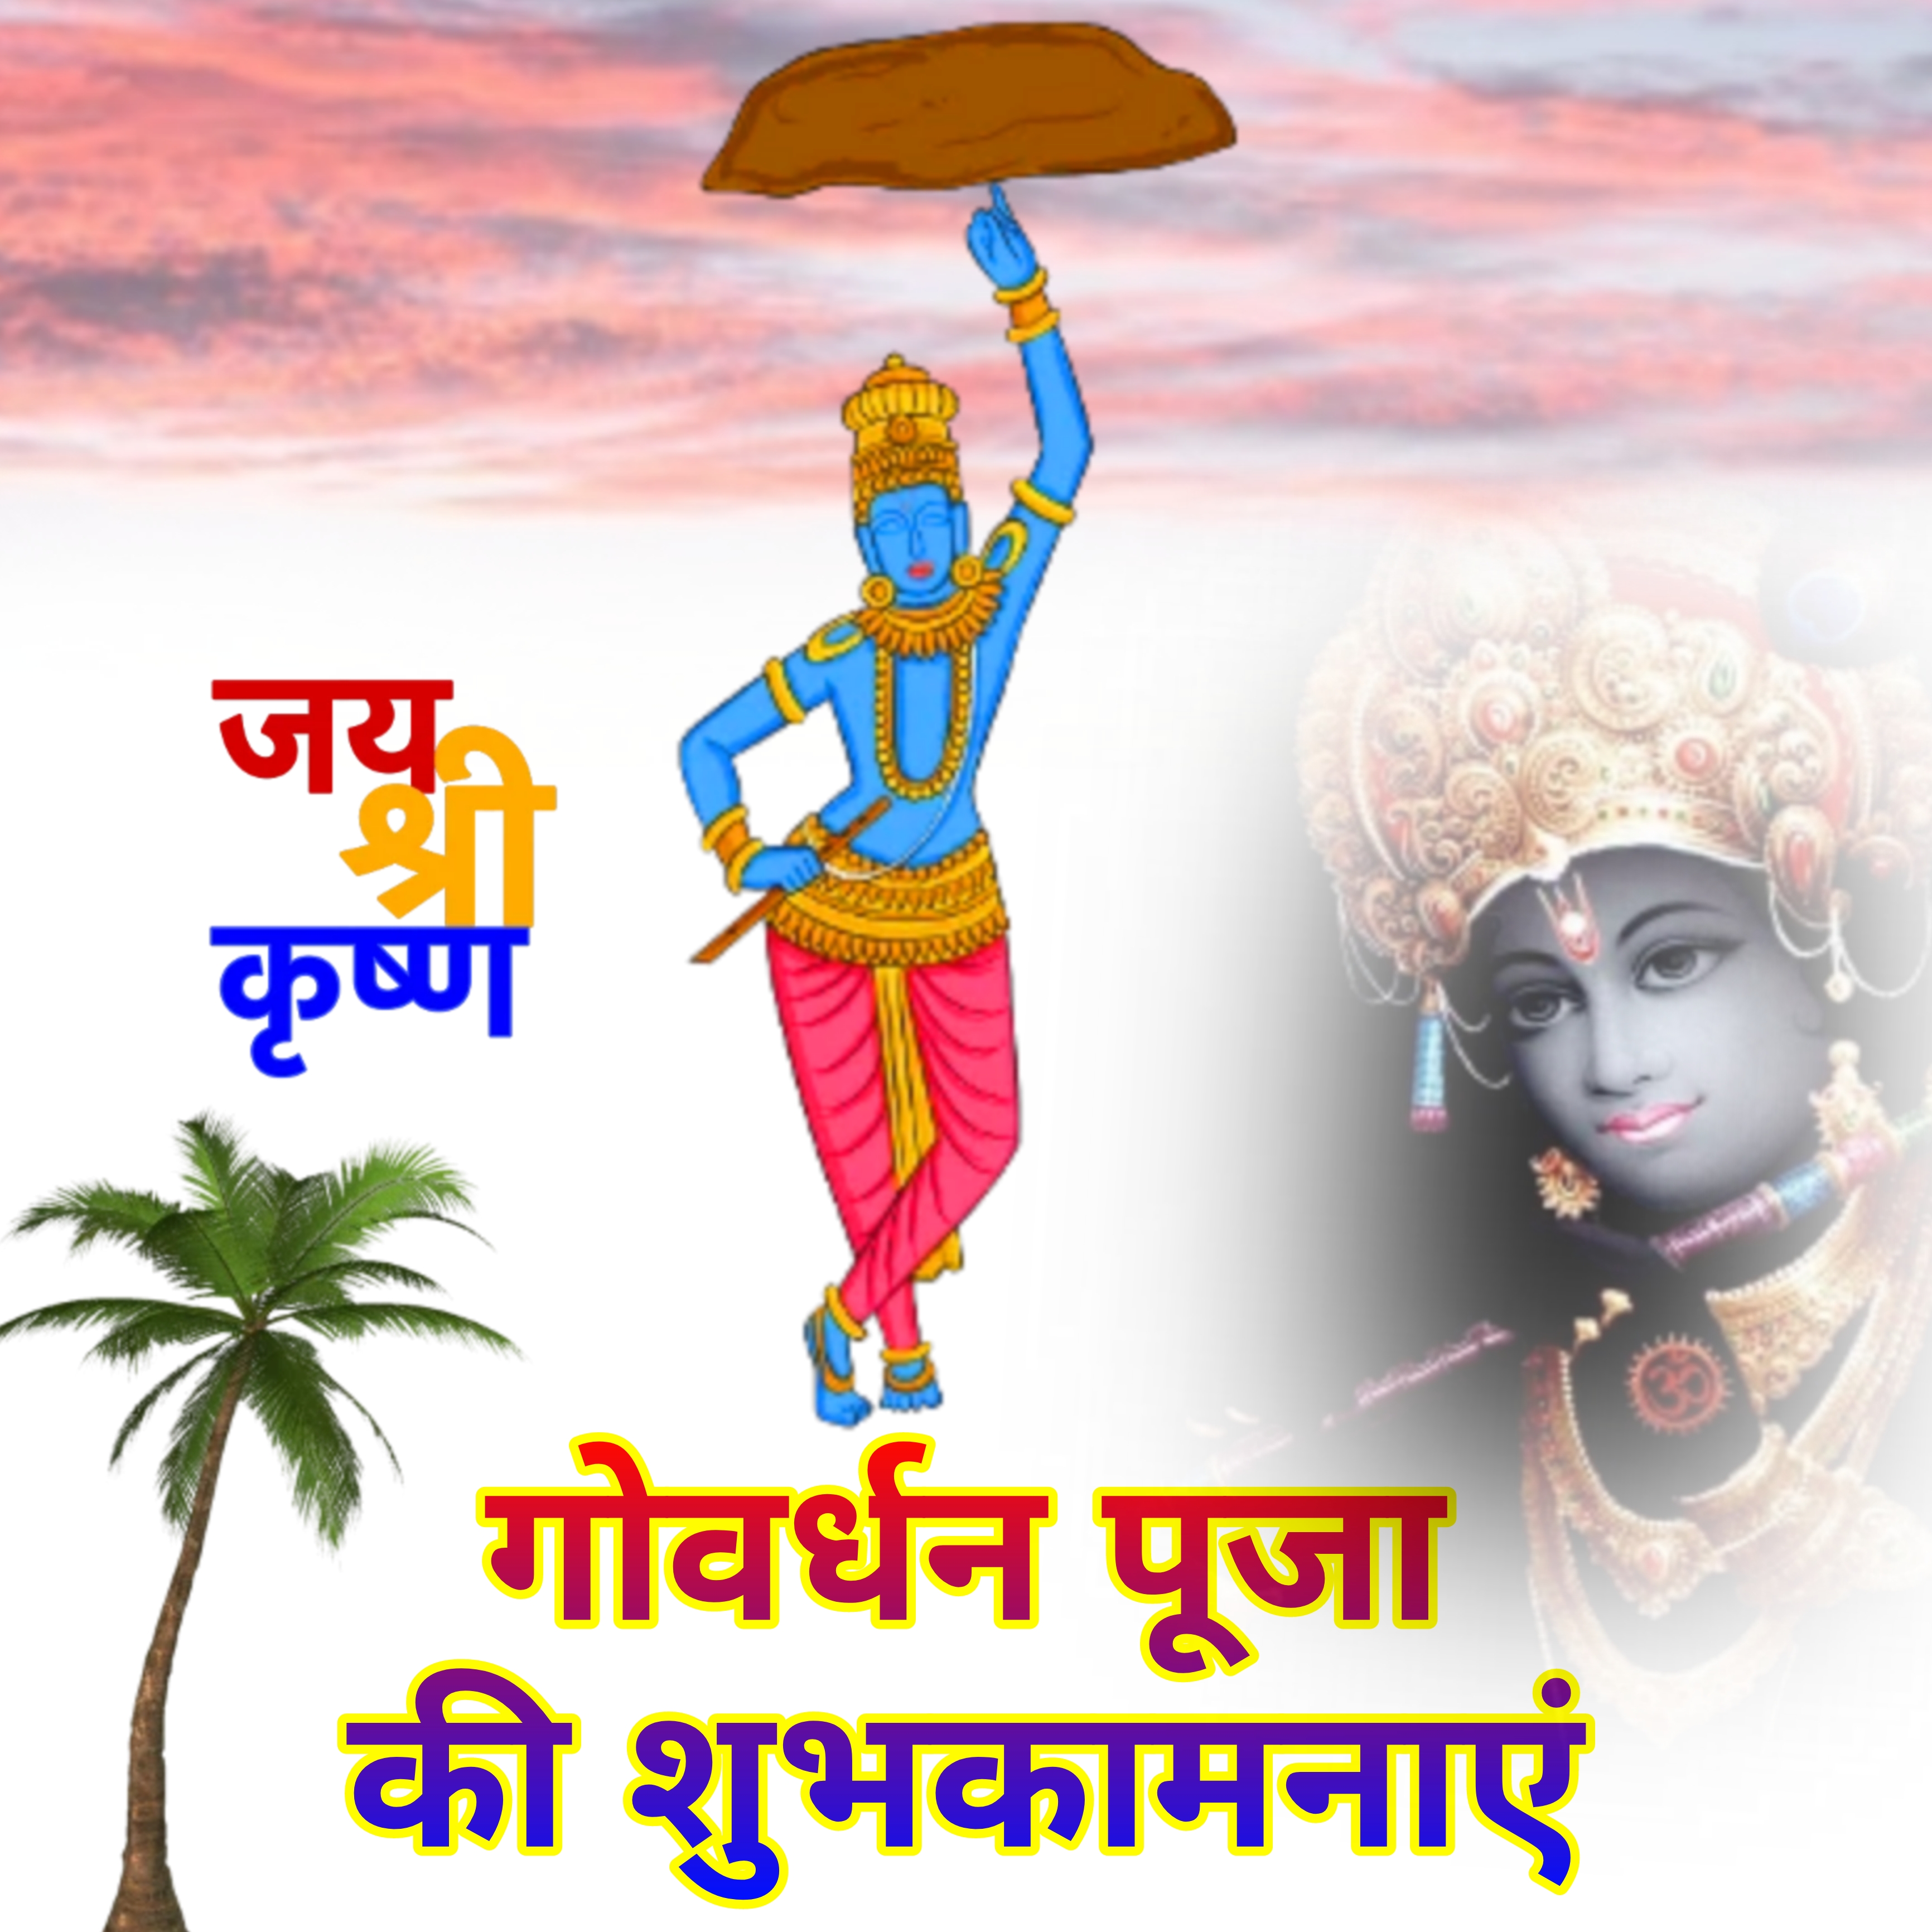 Happy Govardhan Puja wishes images  Govardhan Puja ki Hardik Shubhkamnayen